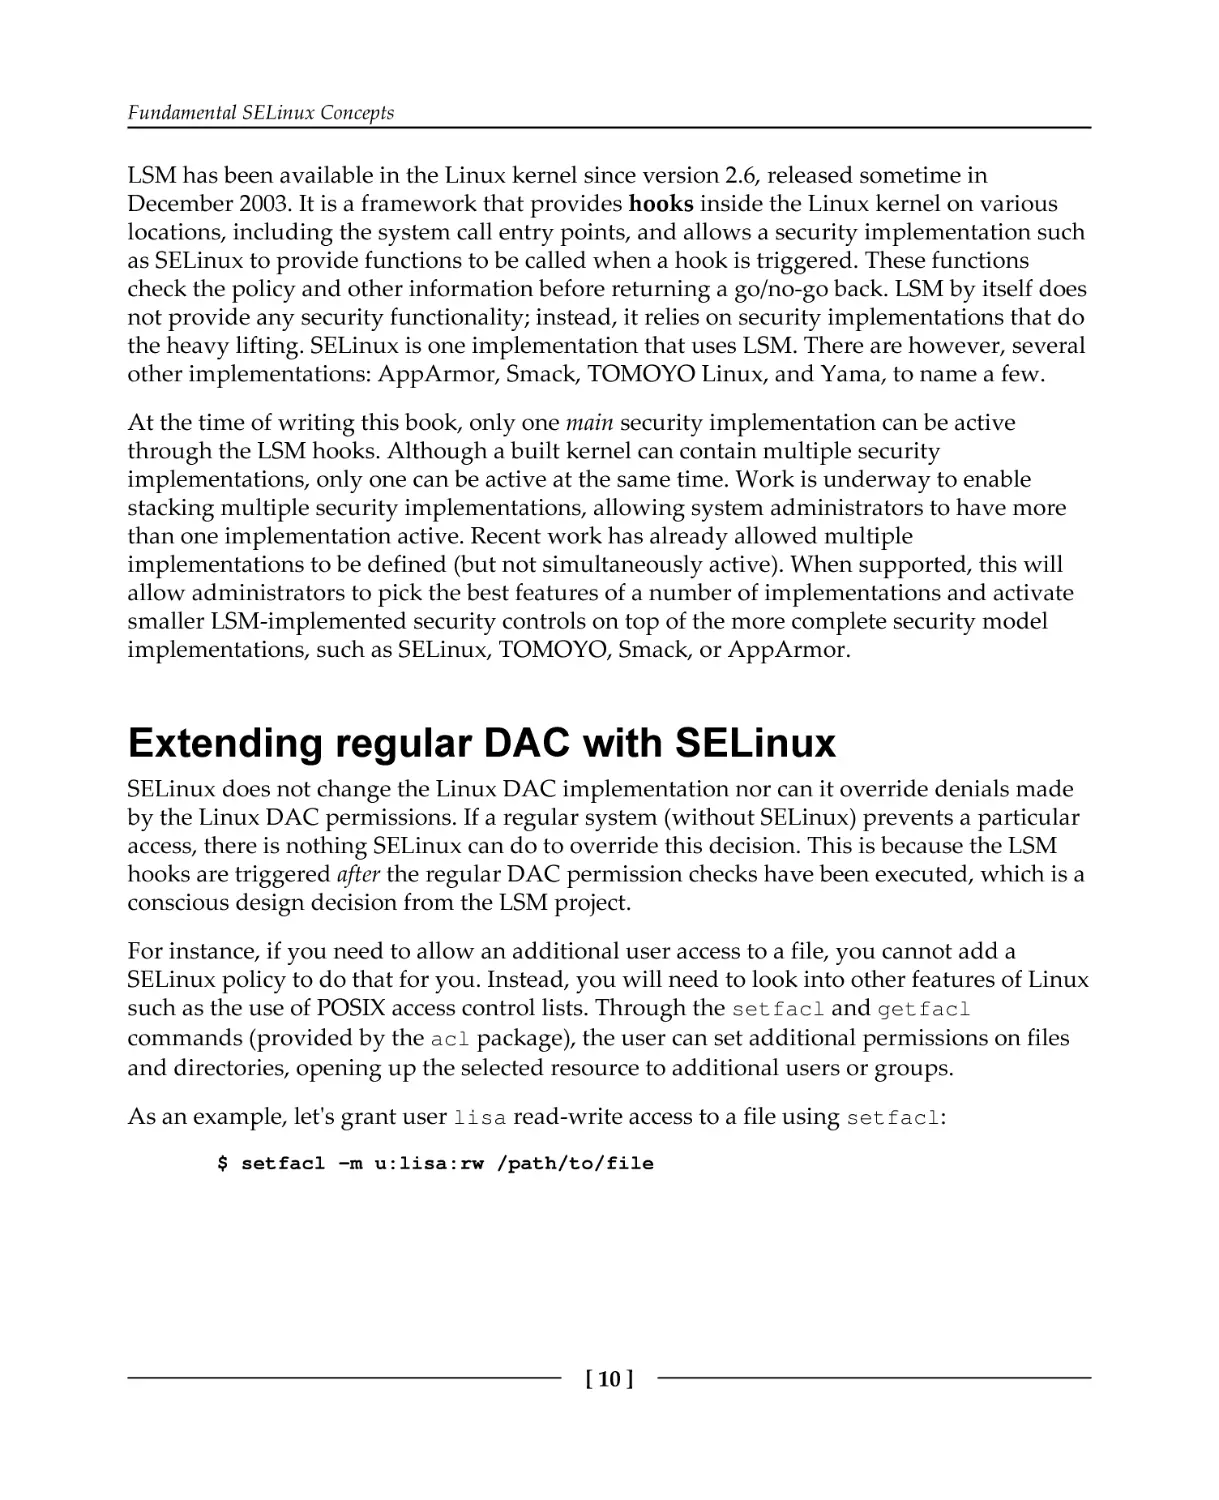 Extending regular DAC with SELinux